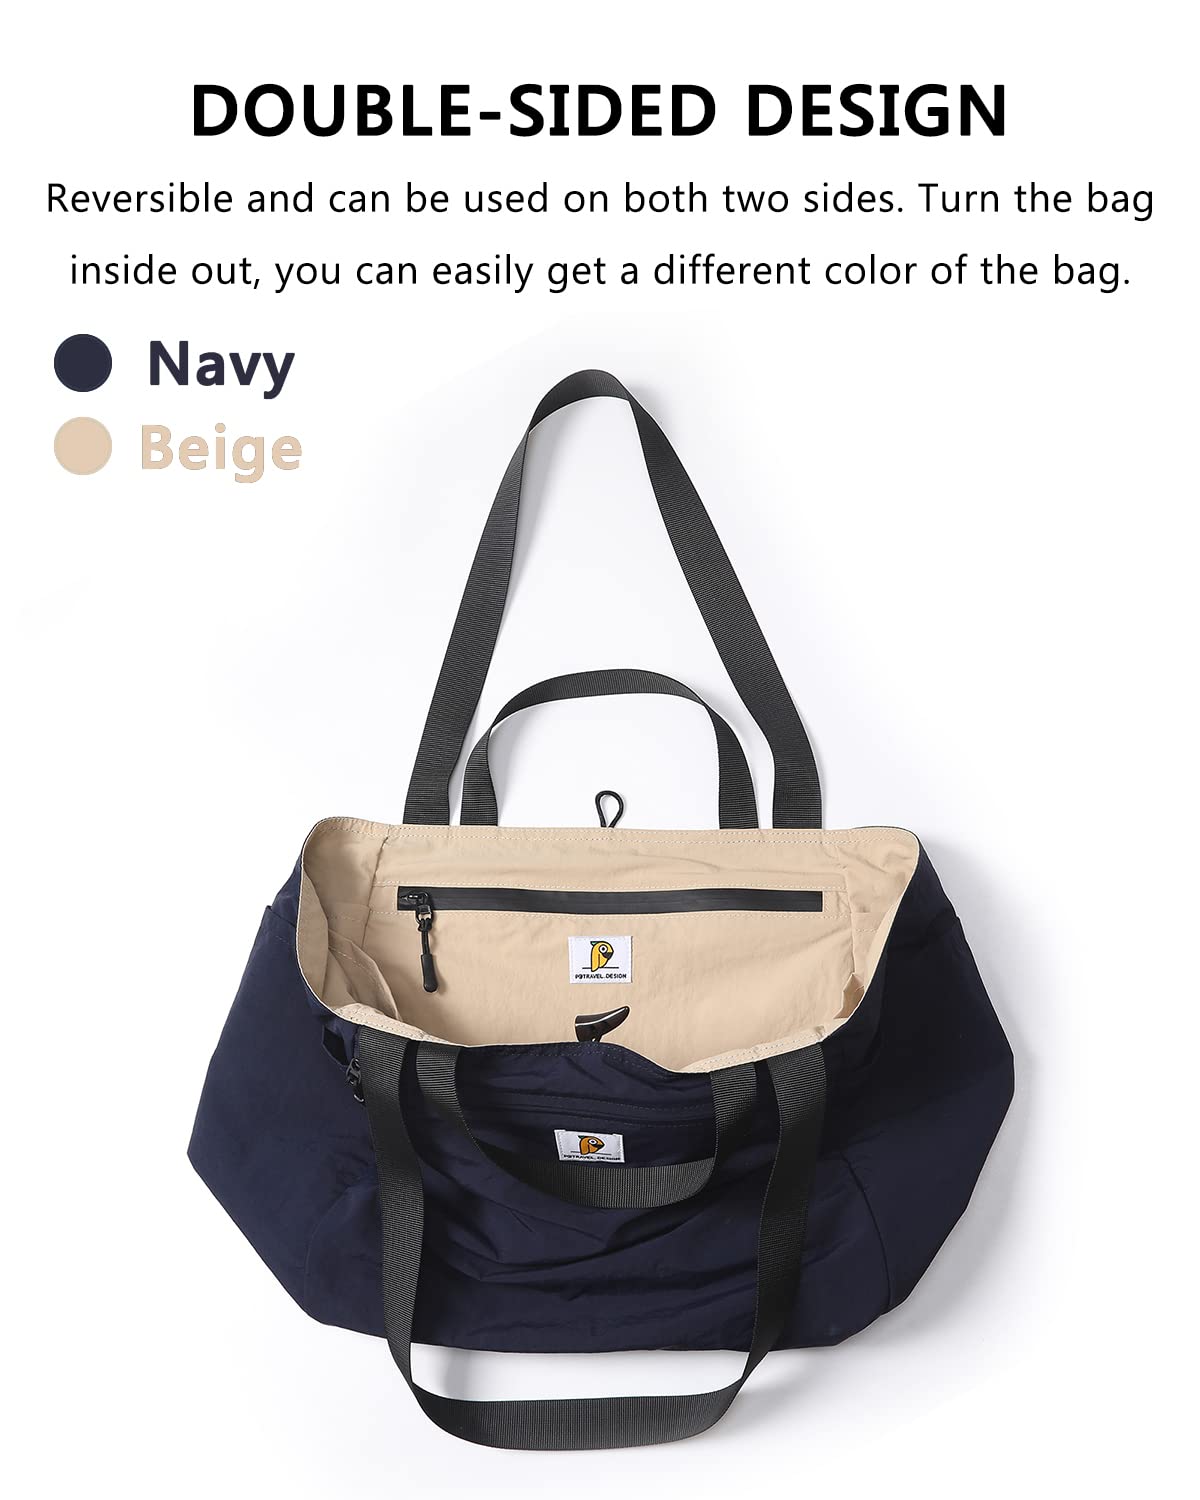 Foldable Reversible Tote Duffle Weekender Travel Business Trip Cabin Buggy Bag Shoulder Yoga Sports Gym Luggage Backpack